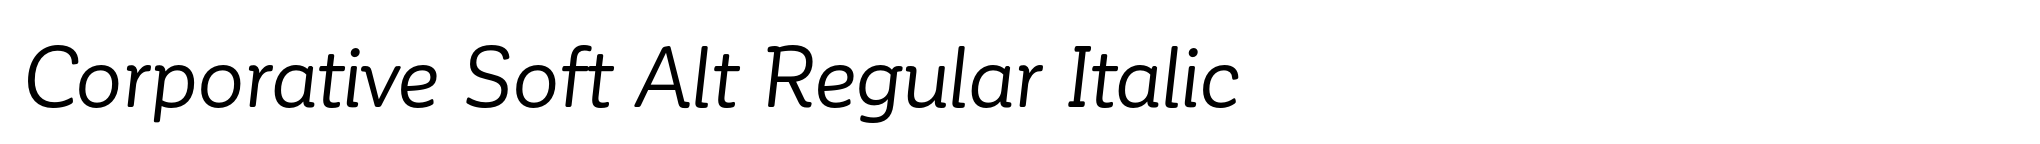 Corporative Soft Alt Regular Italic image